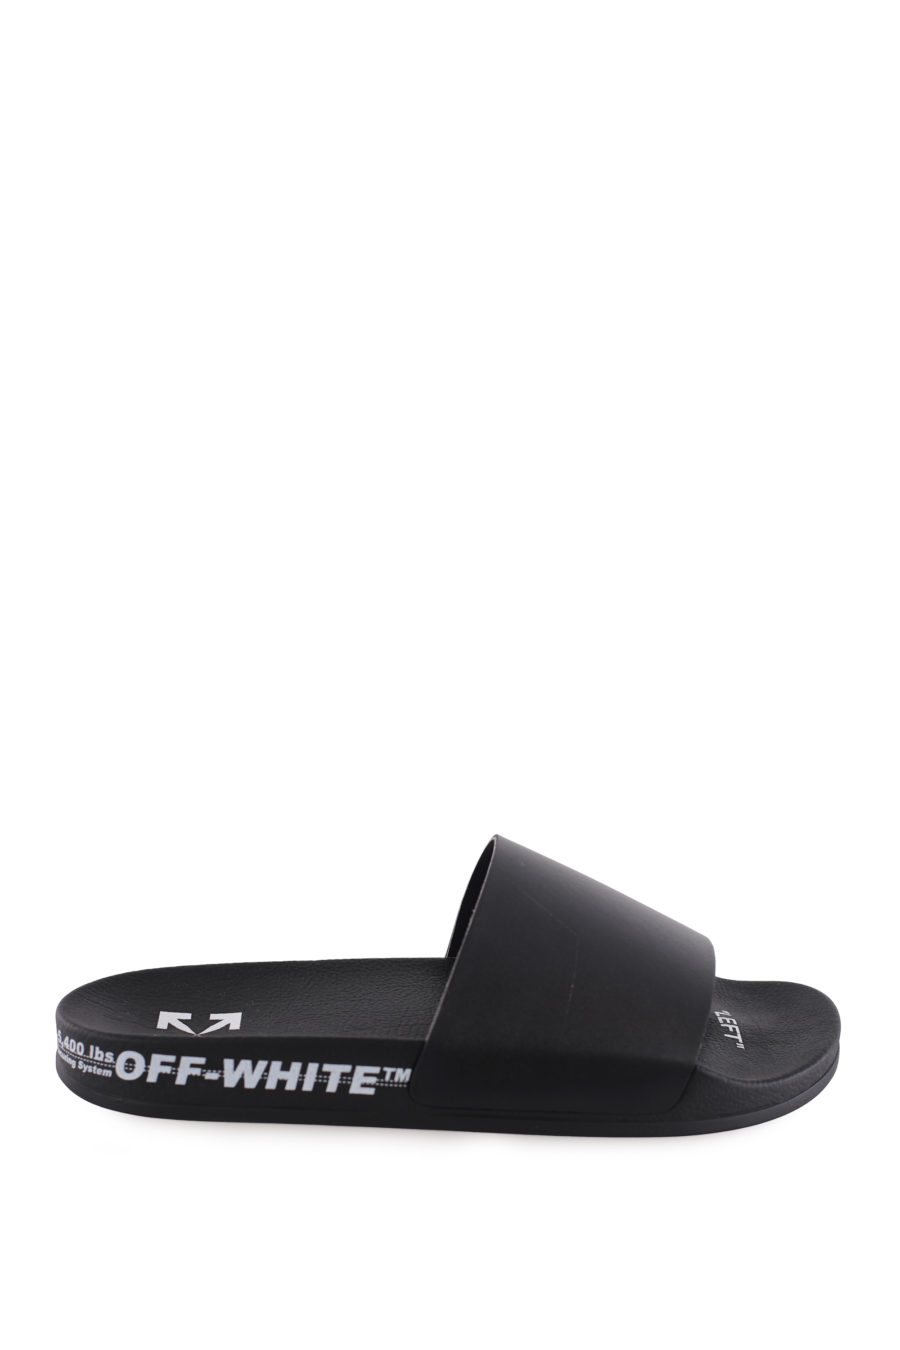 Slides negras con detalles blancos - IMG 7375